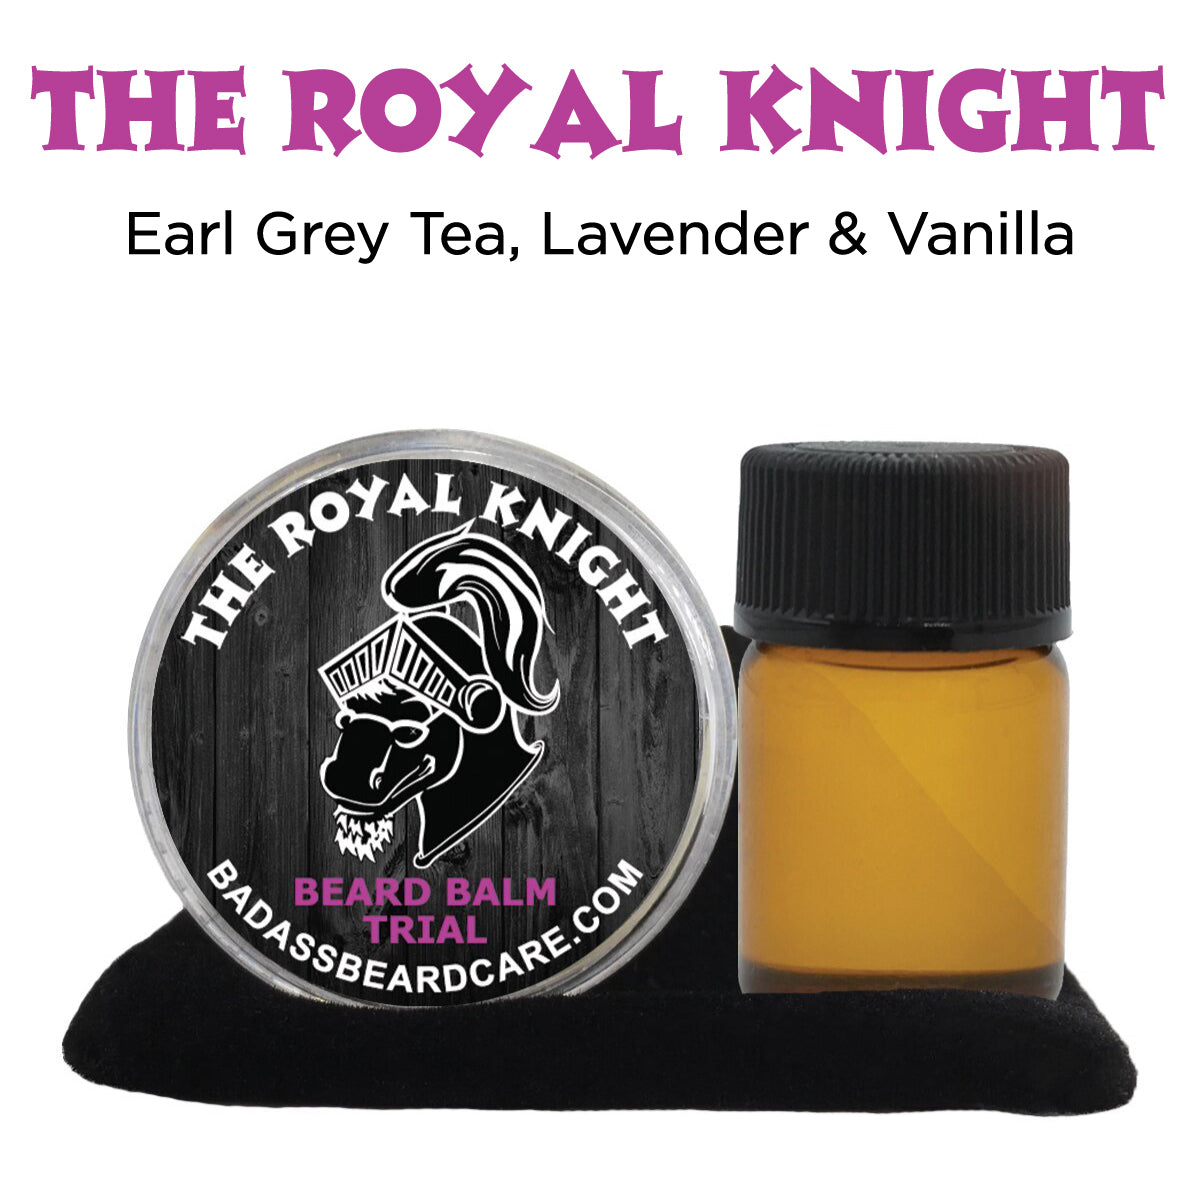 The Royal Knight